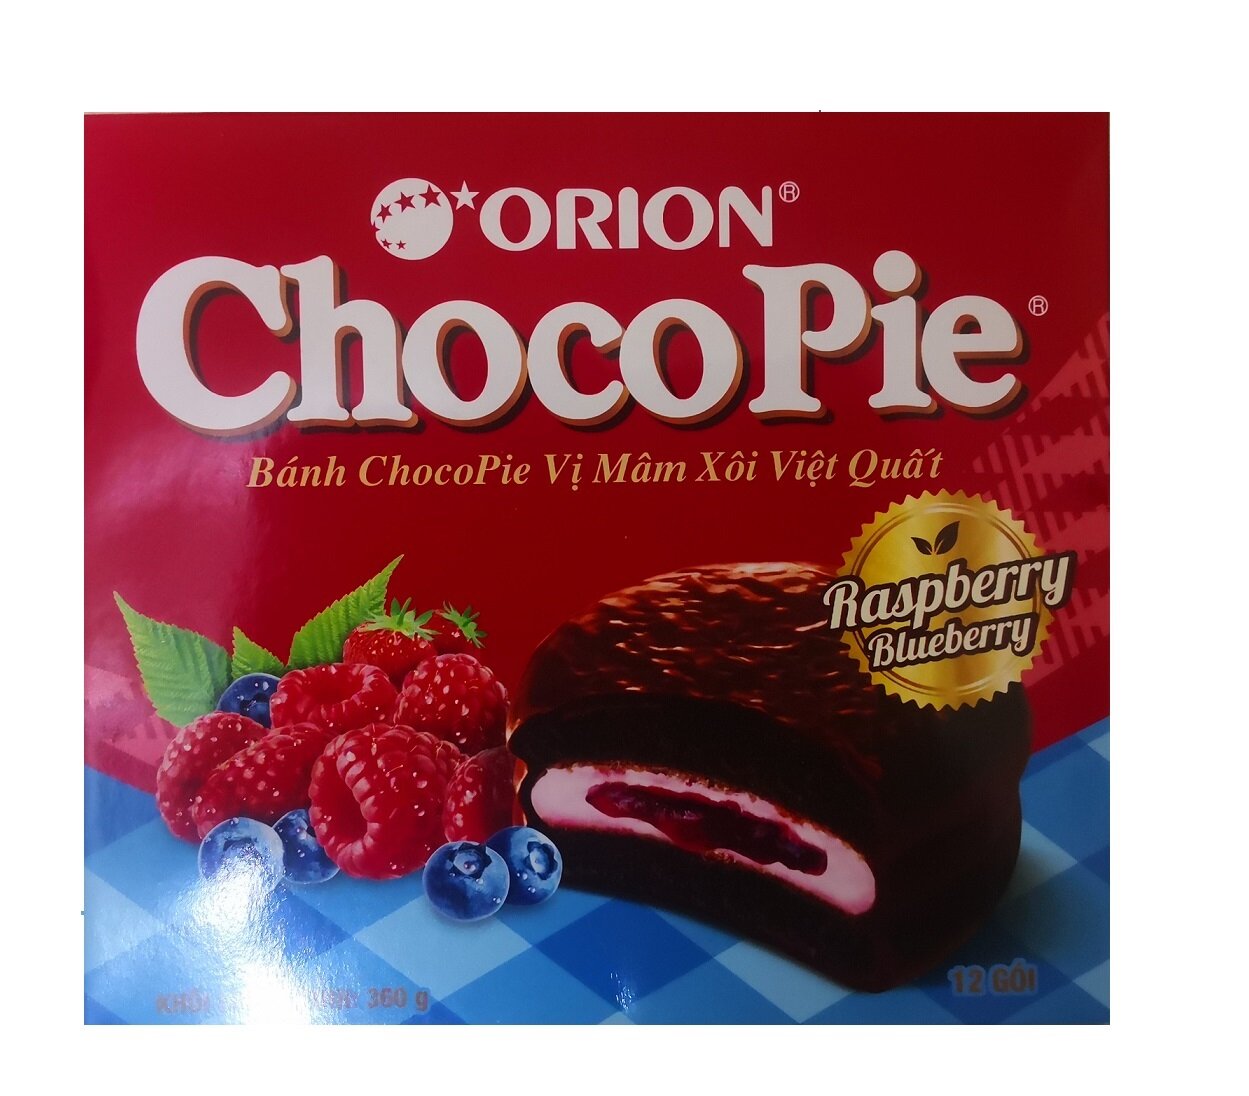 Орион Чоко Пай, Малина и Черника/Orion Choco Pie Raspberry&Blueberry, 360гр (Вьетнам)